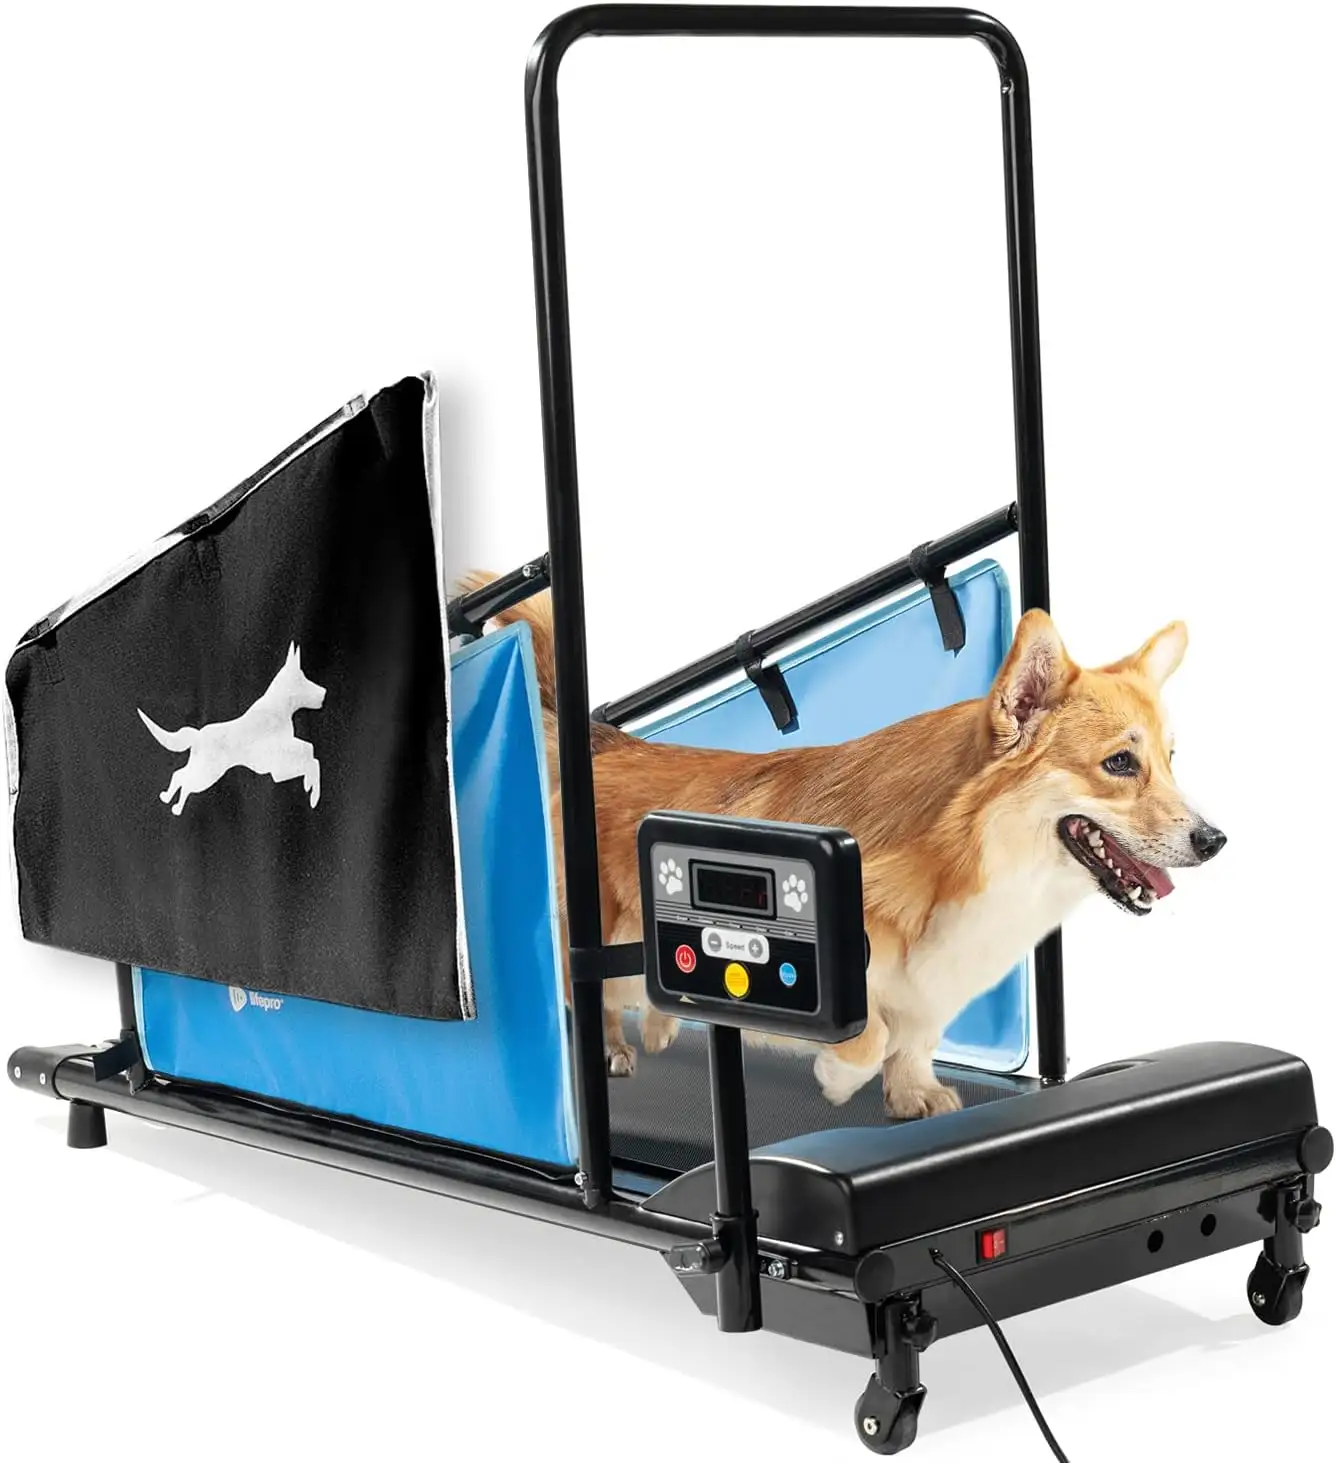 Elettrico pet dog walker tapis roulant alimentato esercizio animale pet tapis roulant per cane gatto